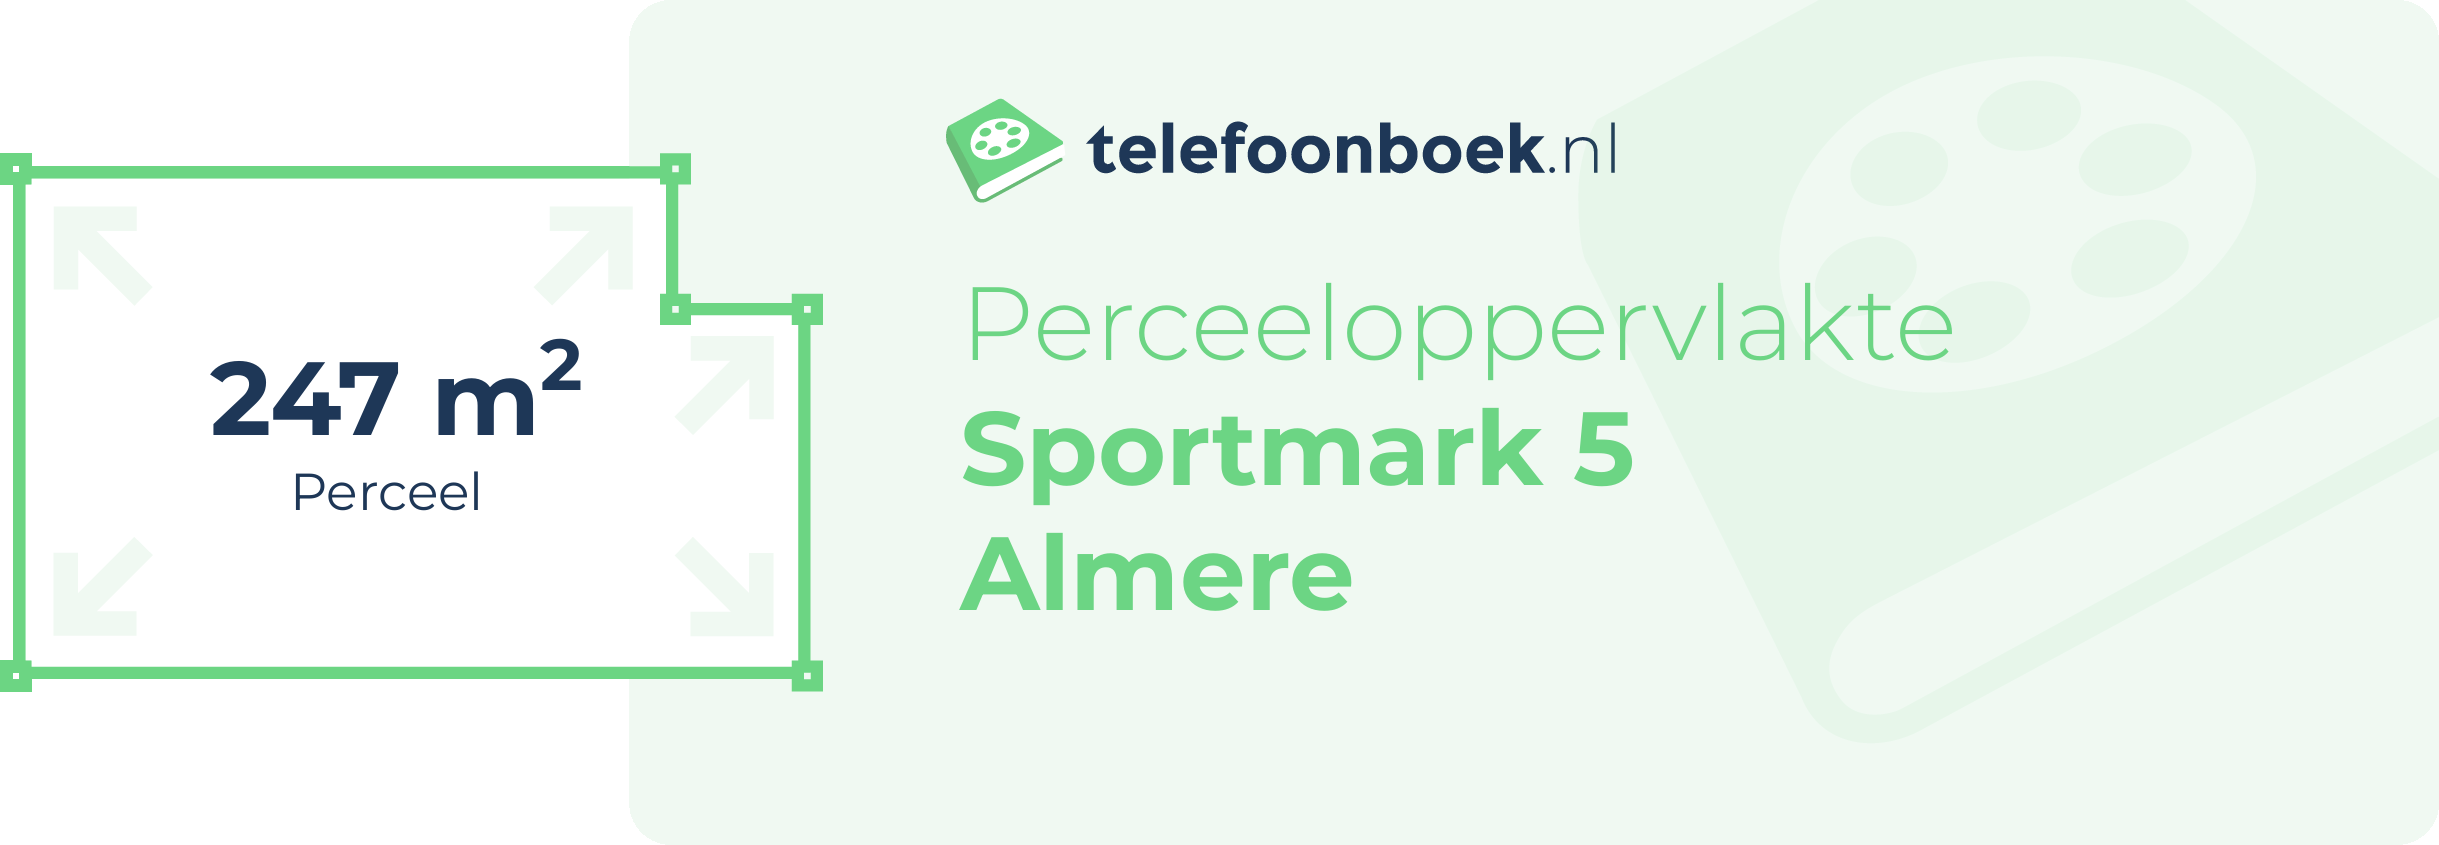 Perceeloppervlakte Sportmark 5 Almere